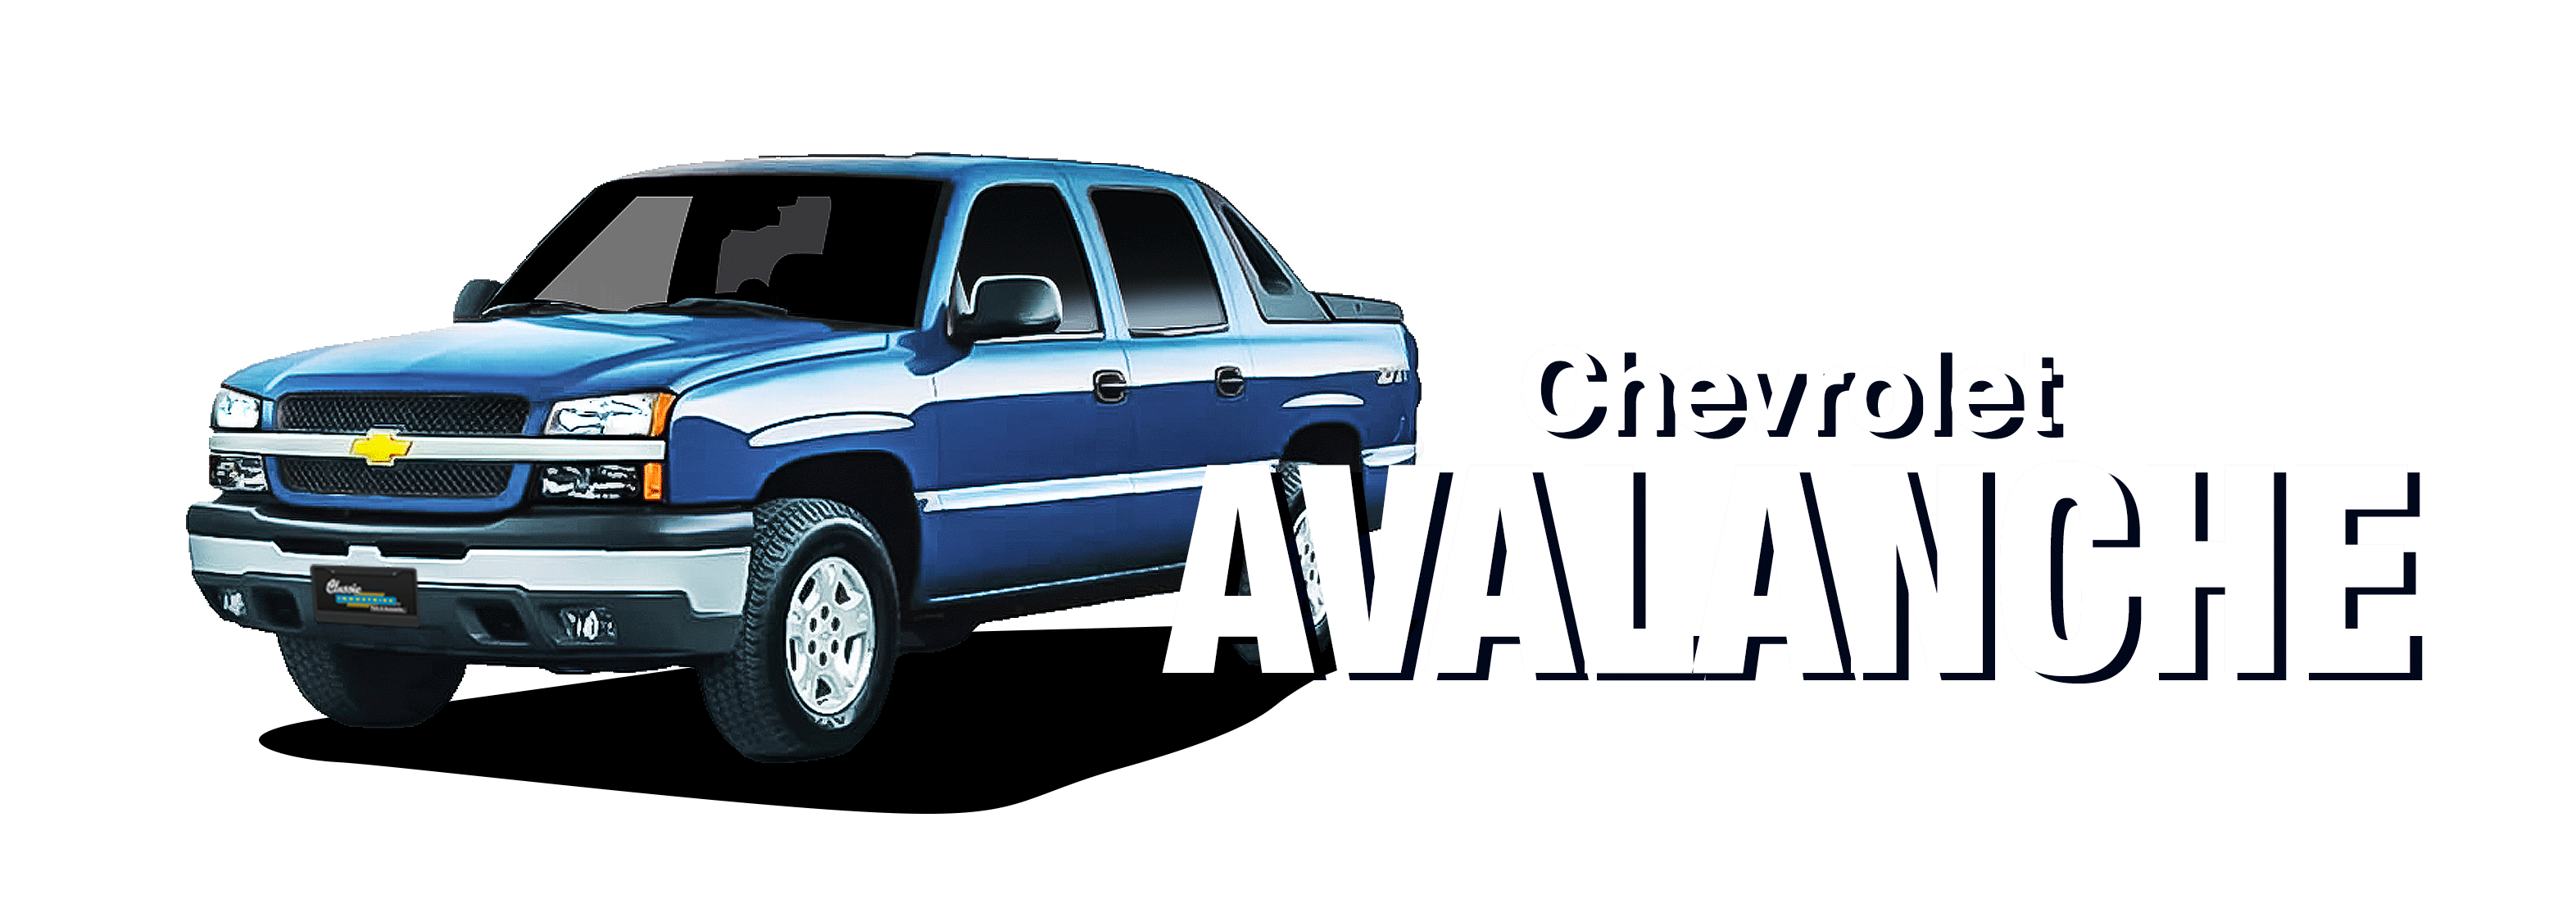 Chevrolet-Avalanche-vehicle-desktop